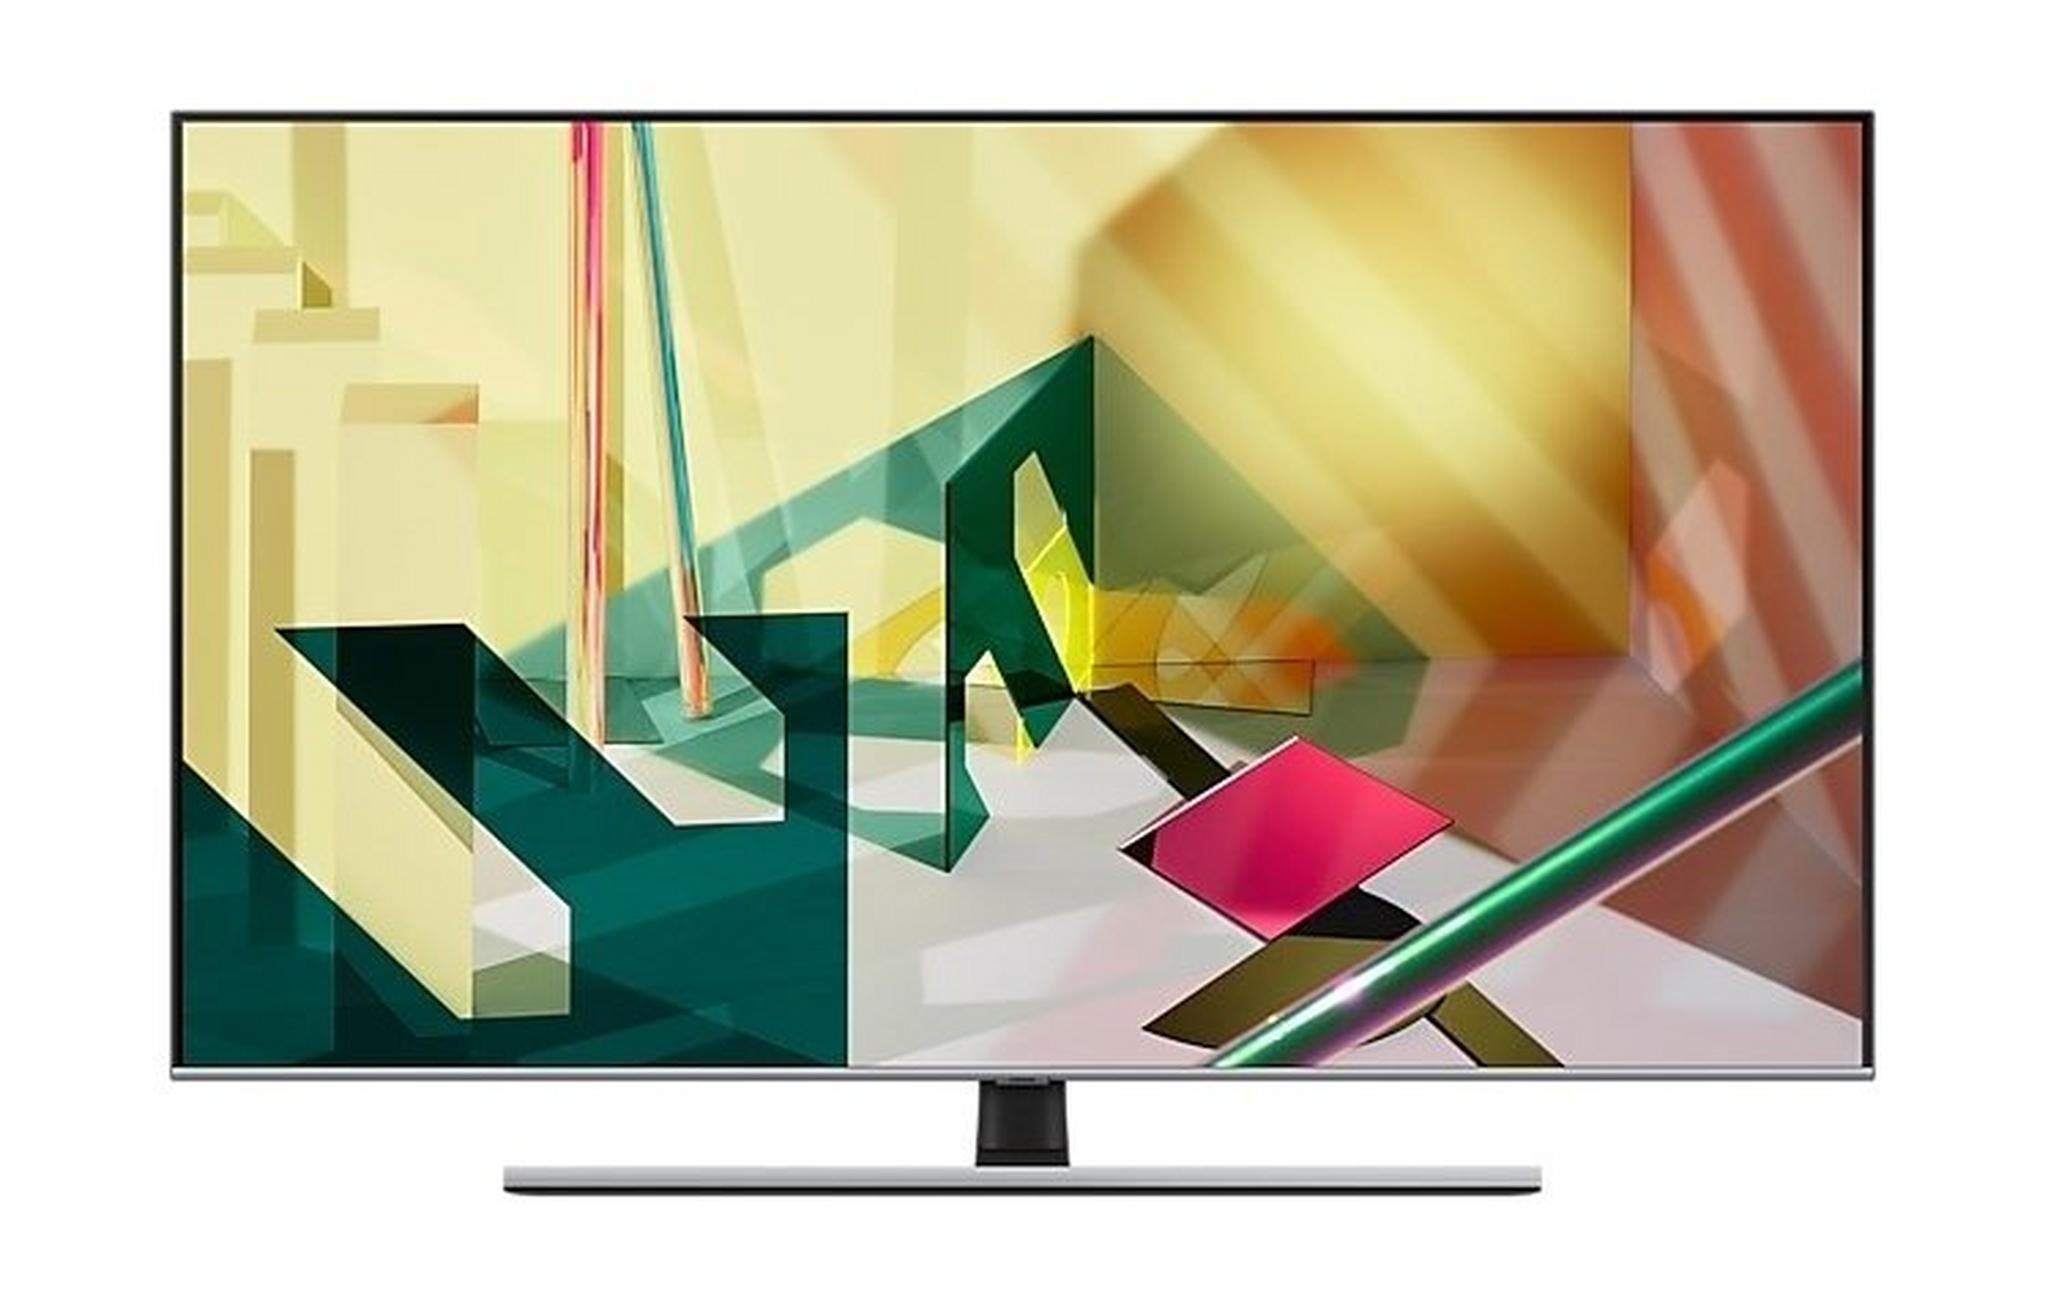 تلفزيون سامسونج الذكي 75 بوصة QLED 4K ال اي دي (2020) - QA75Q70T